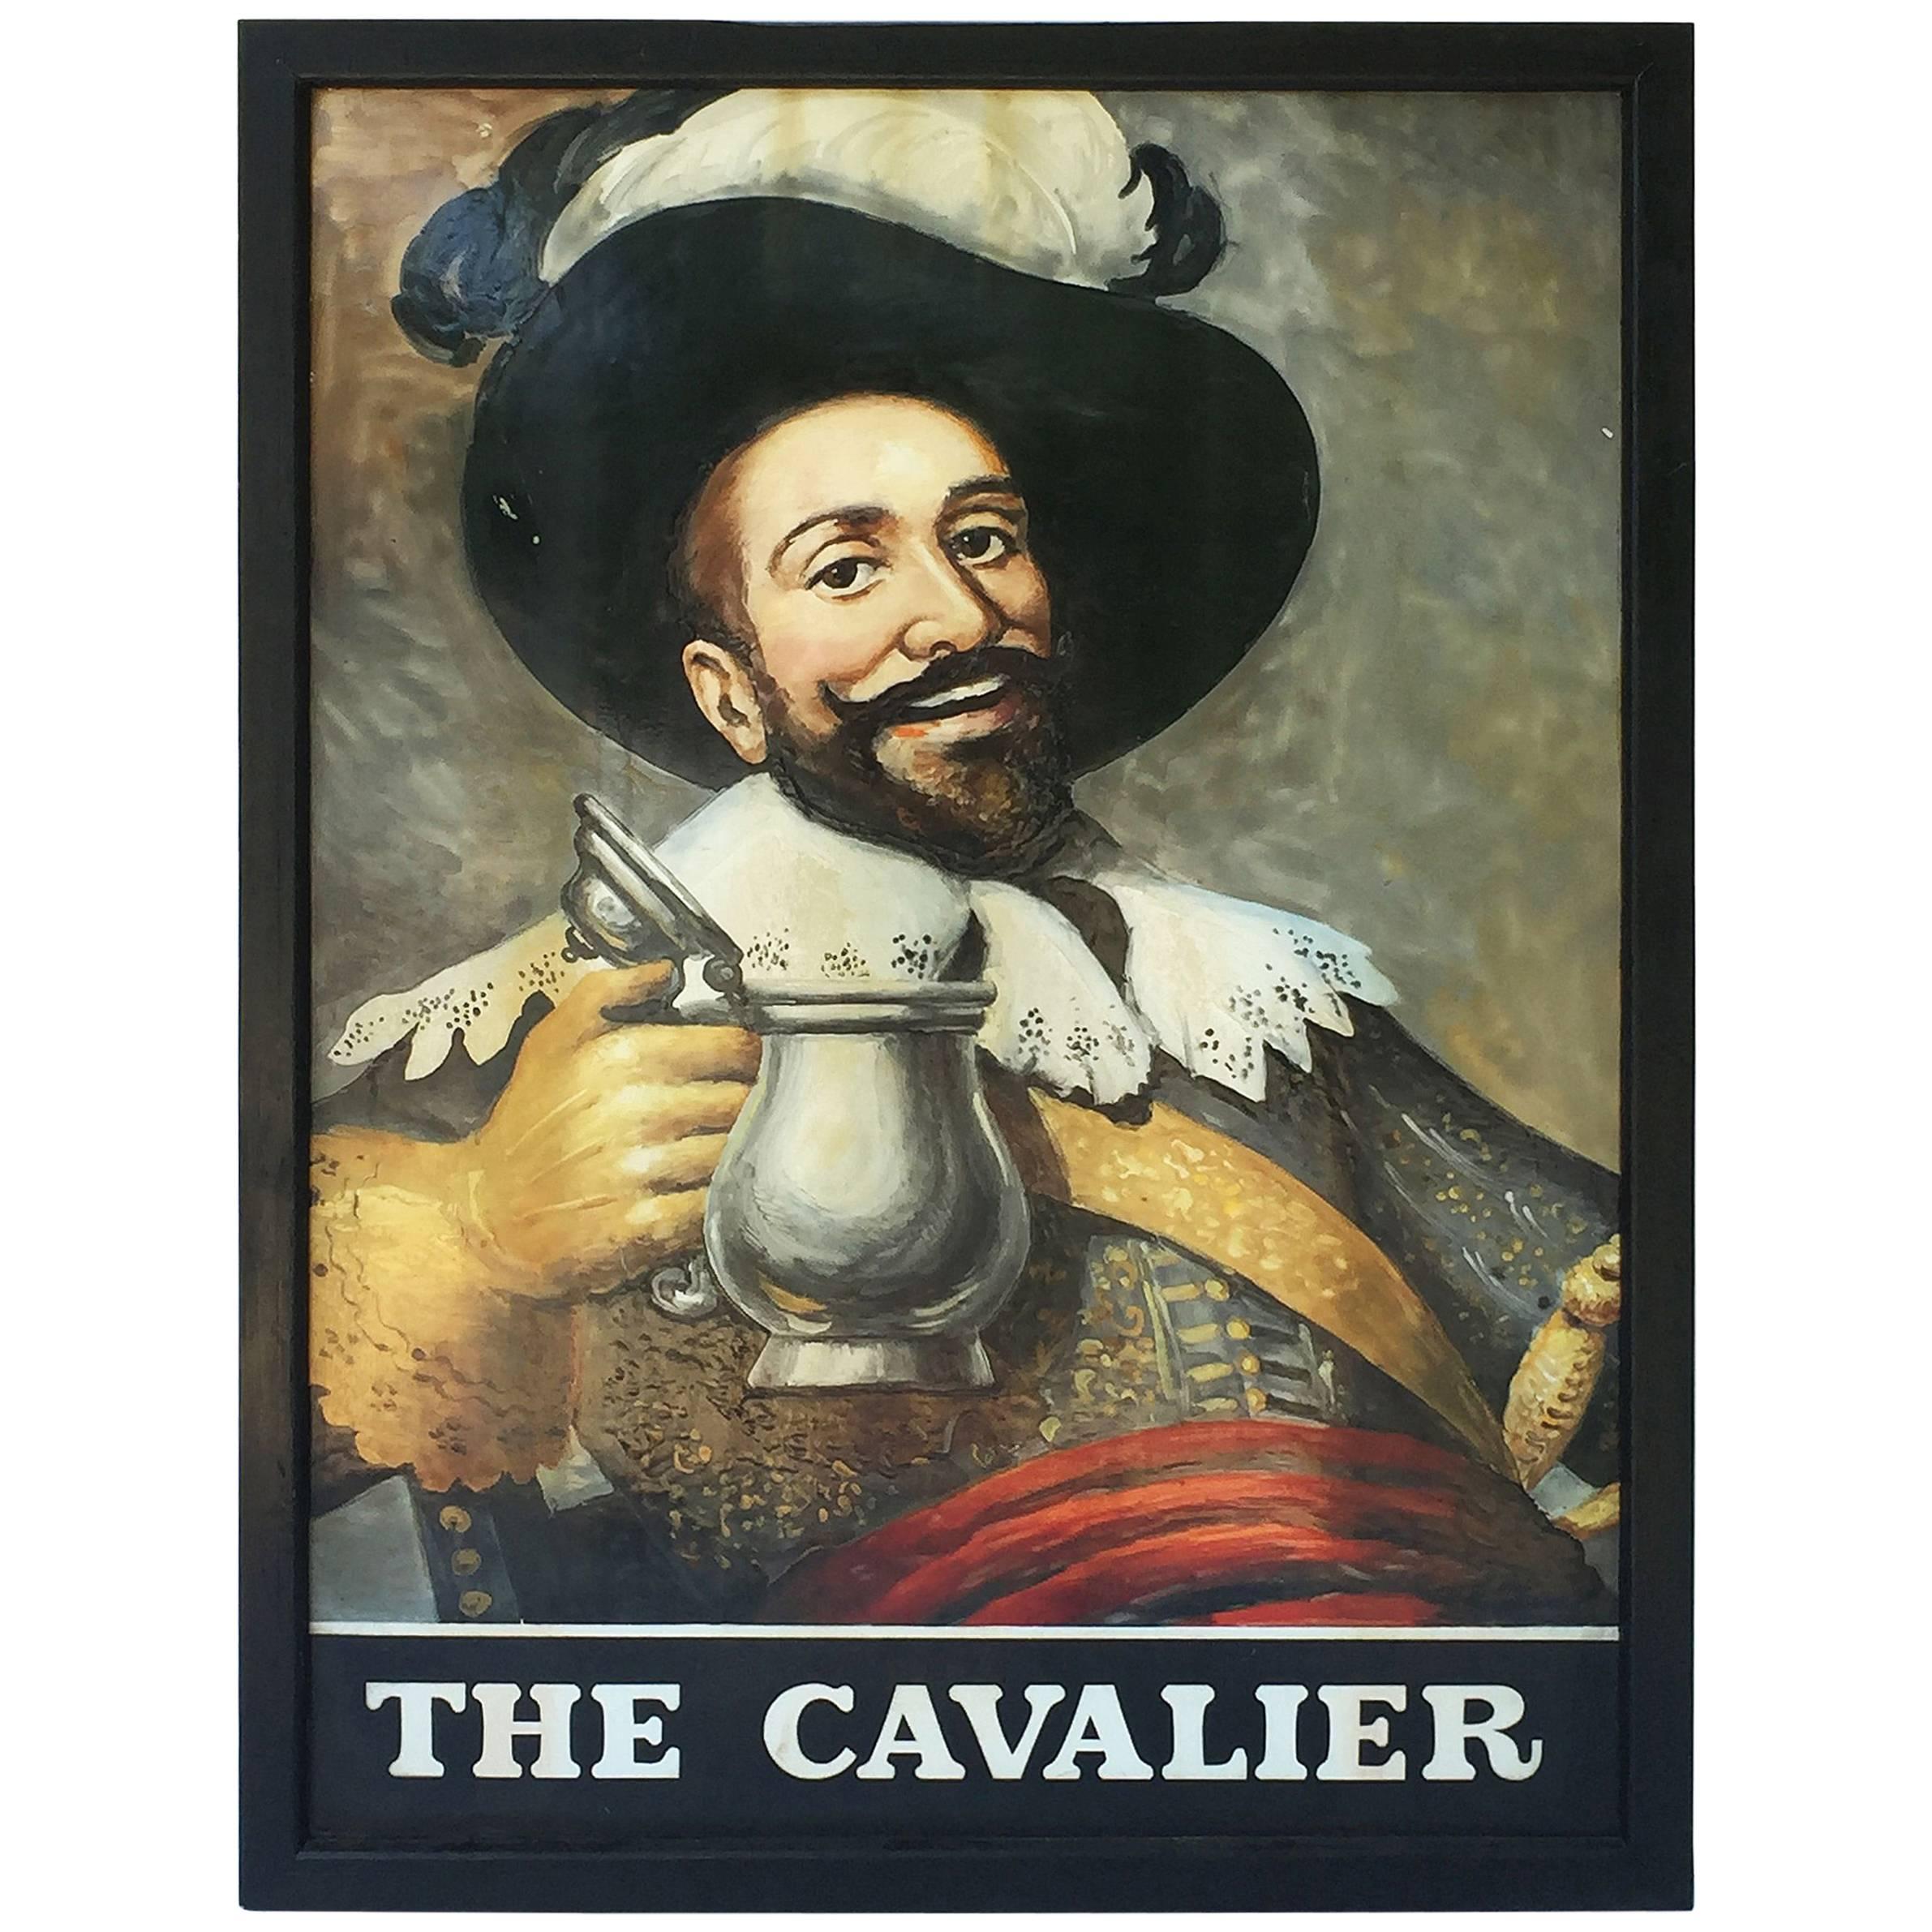 English Pub Sign, "The Cavalier"